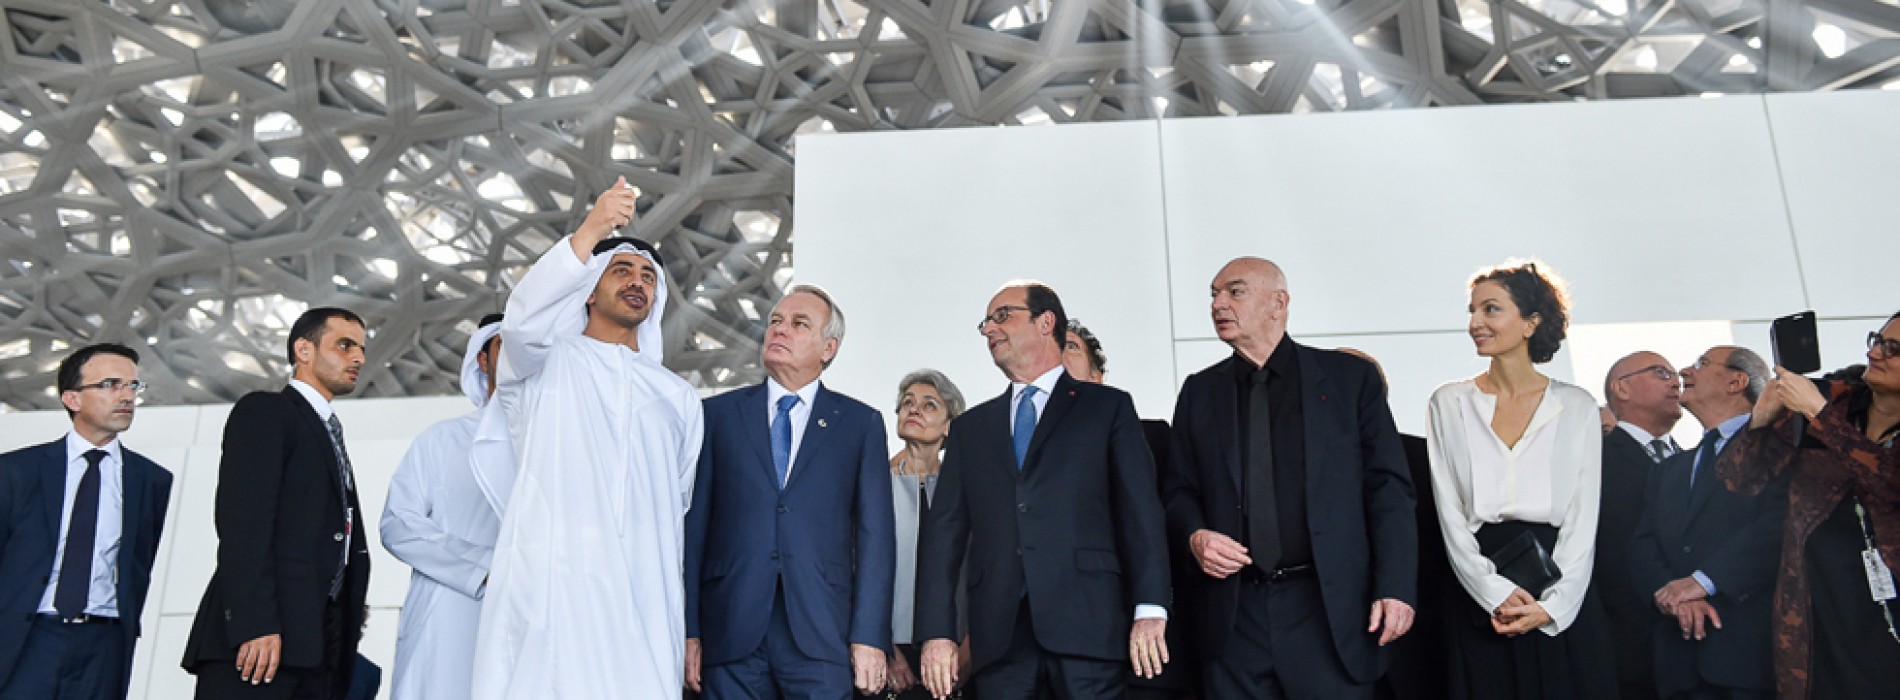 French President tours Louvre Abu Dhabi